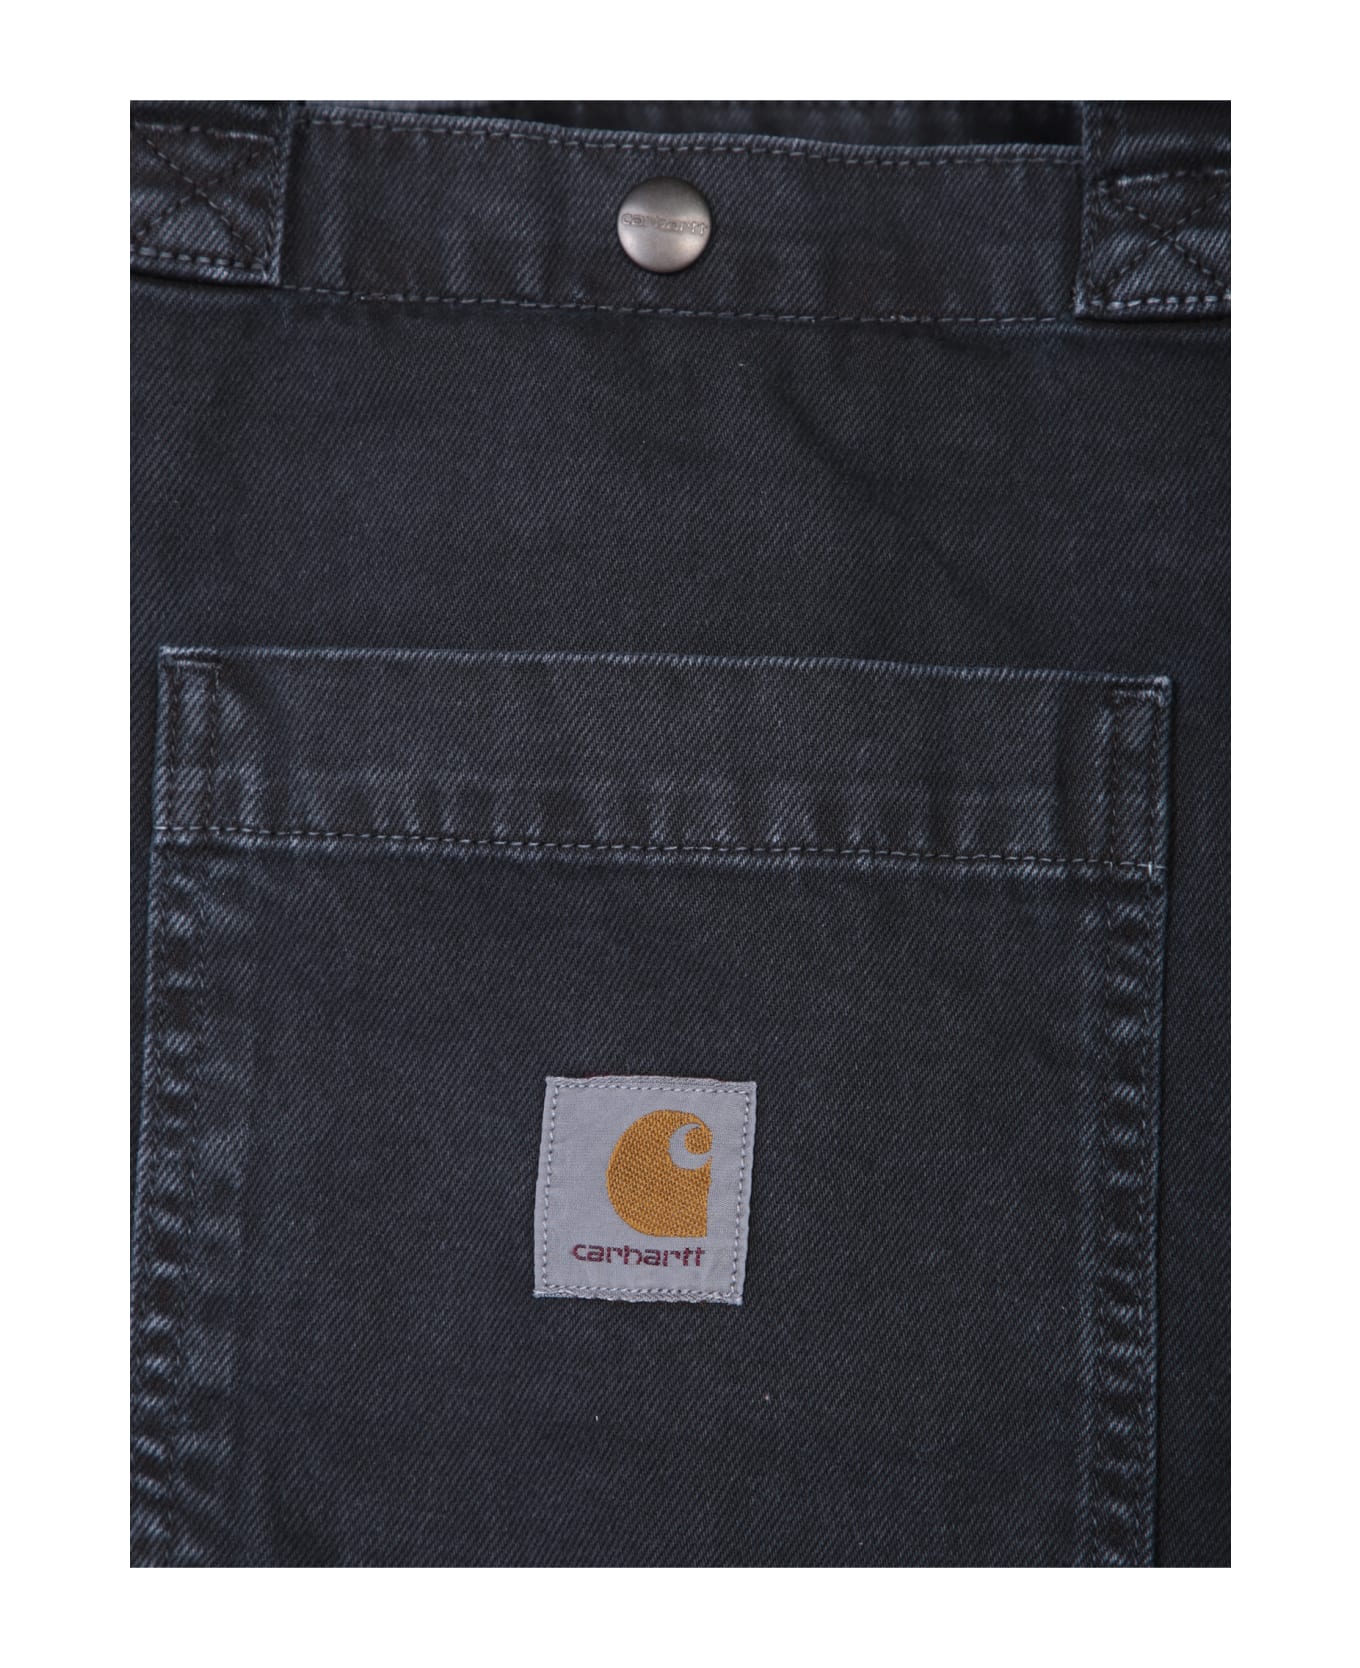 Carhartt Wip Garrison Bag Black - Black